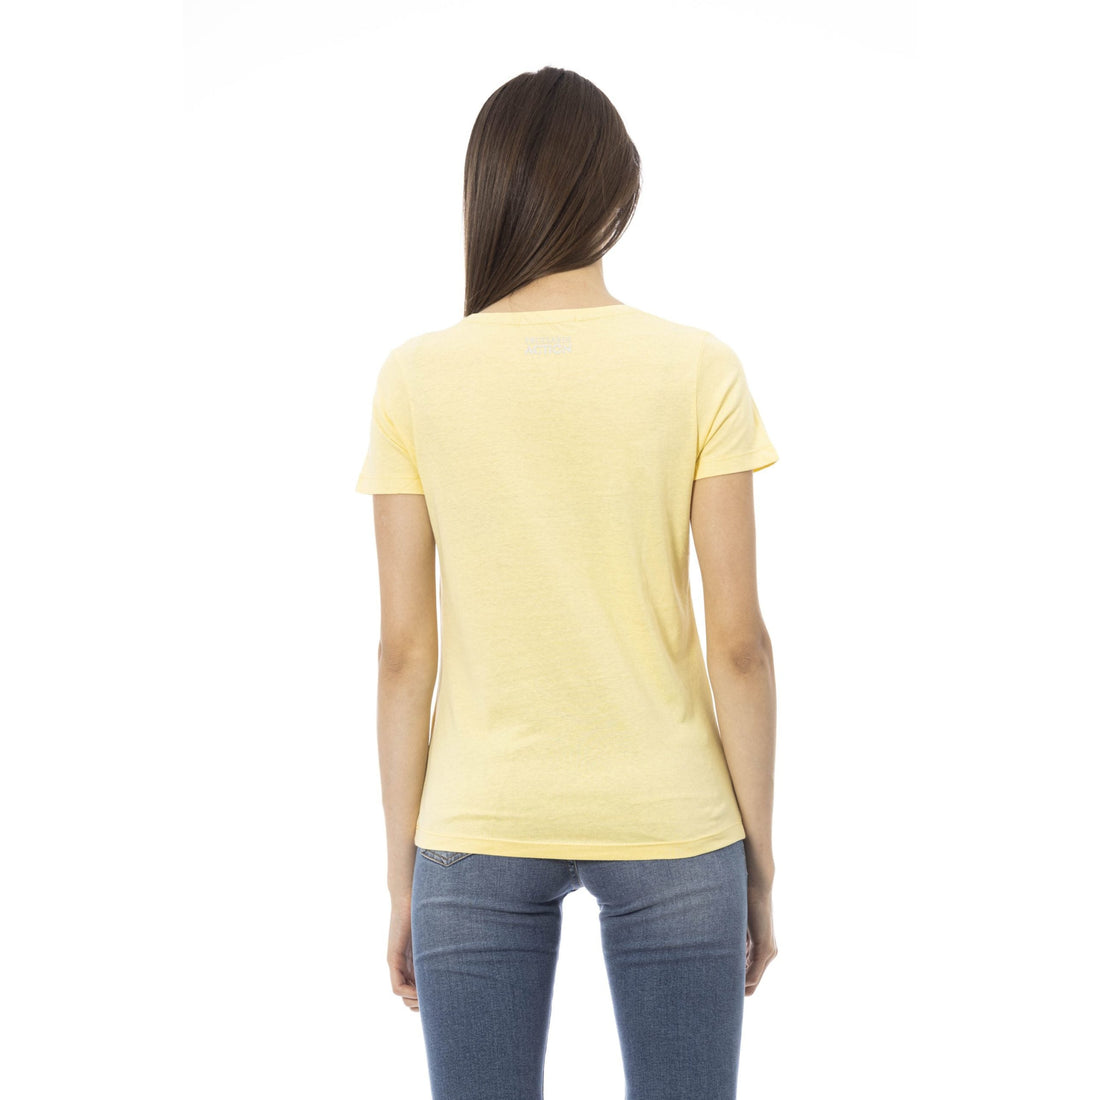 Trussardi Action Yellow Cotton Tops & T-Shirt